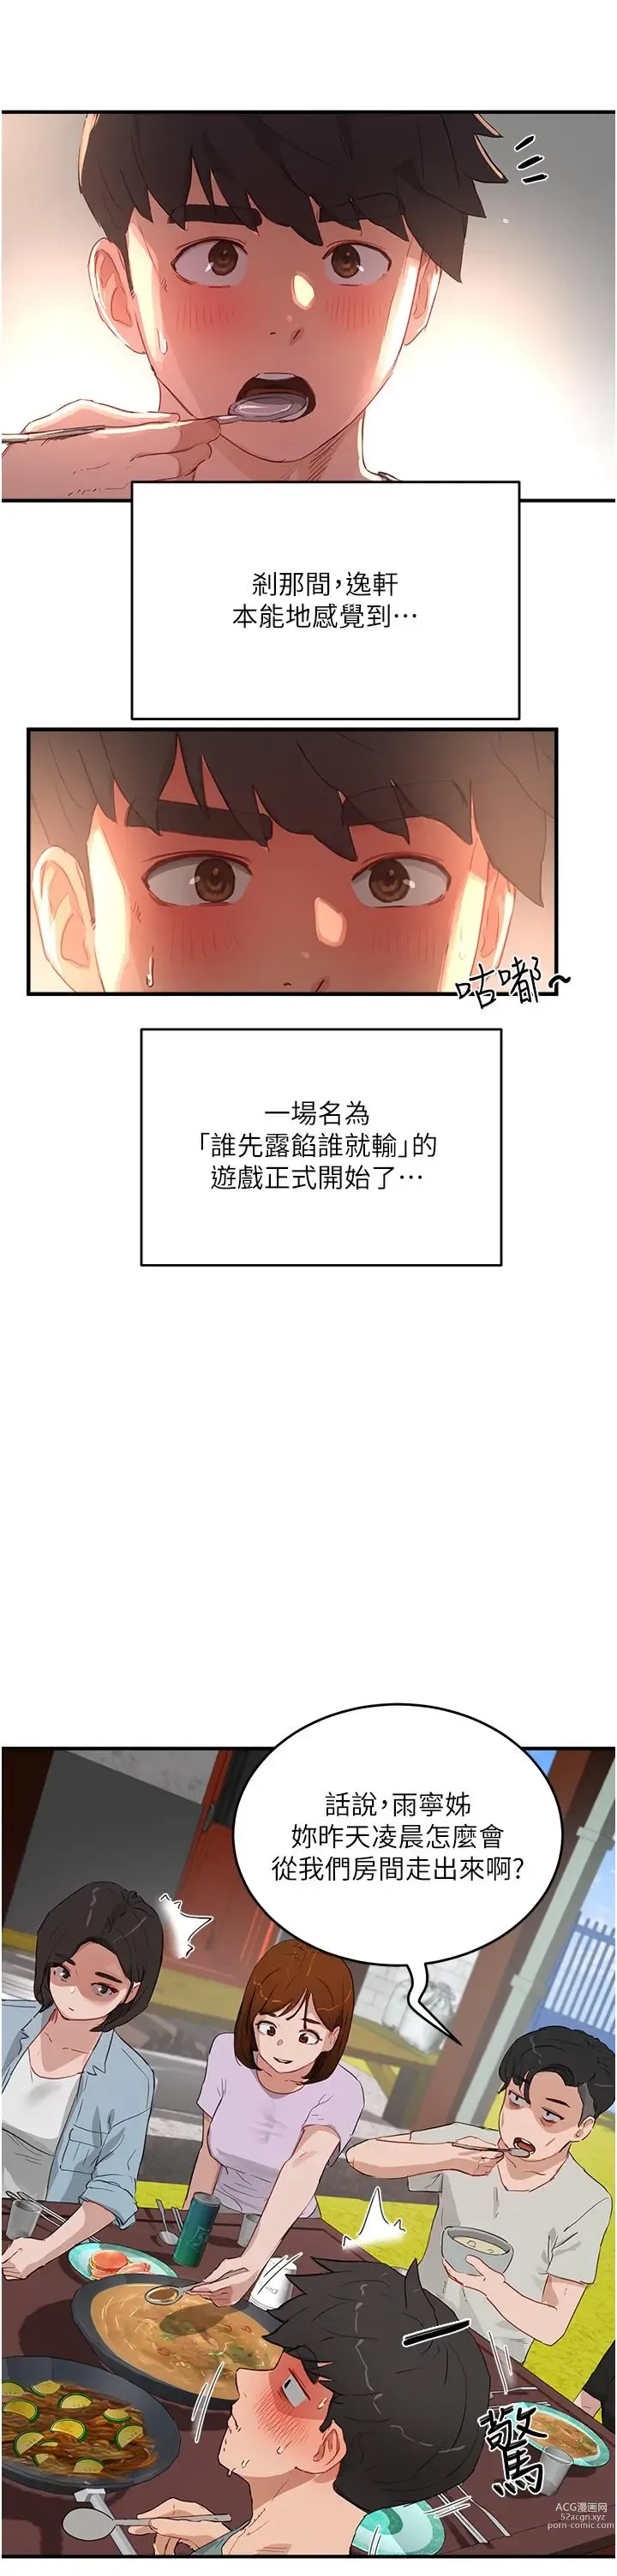 Page 17 of manga 夏日深处/Summer of Love 61-76